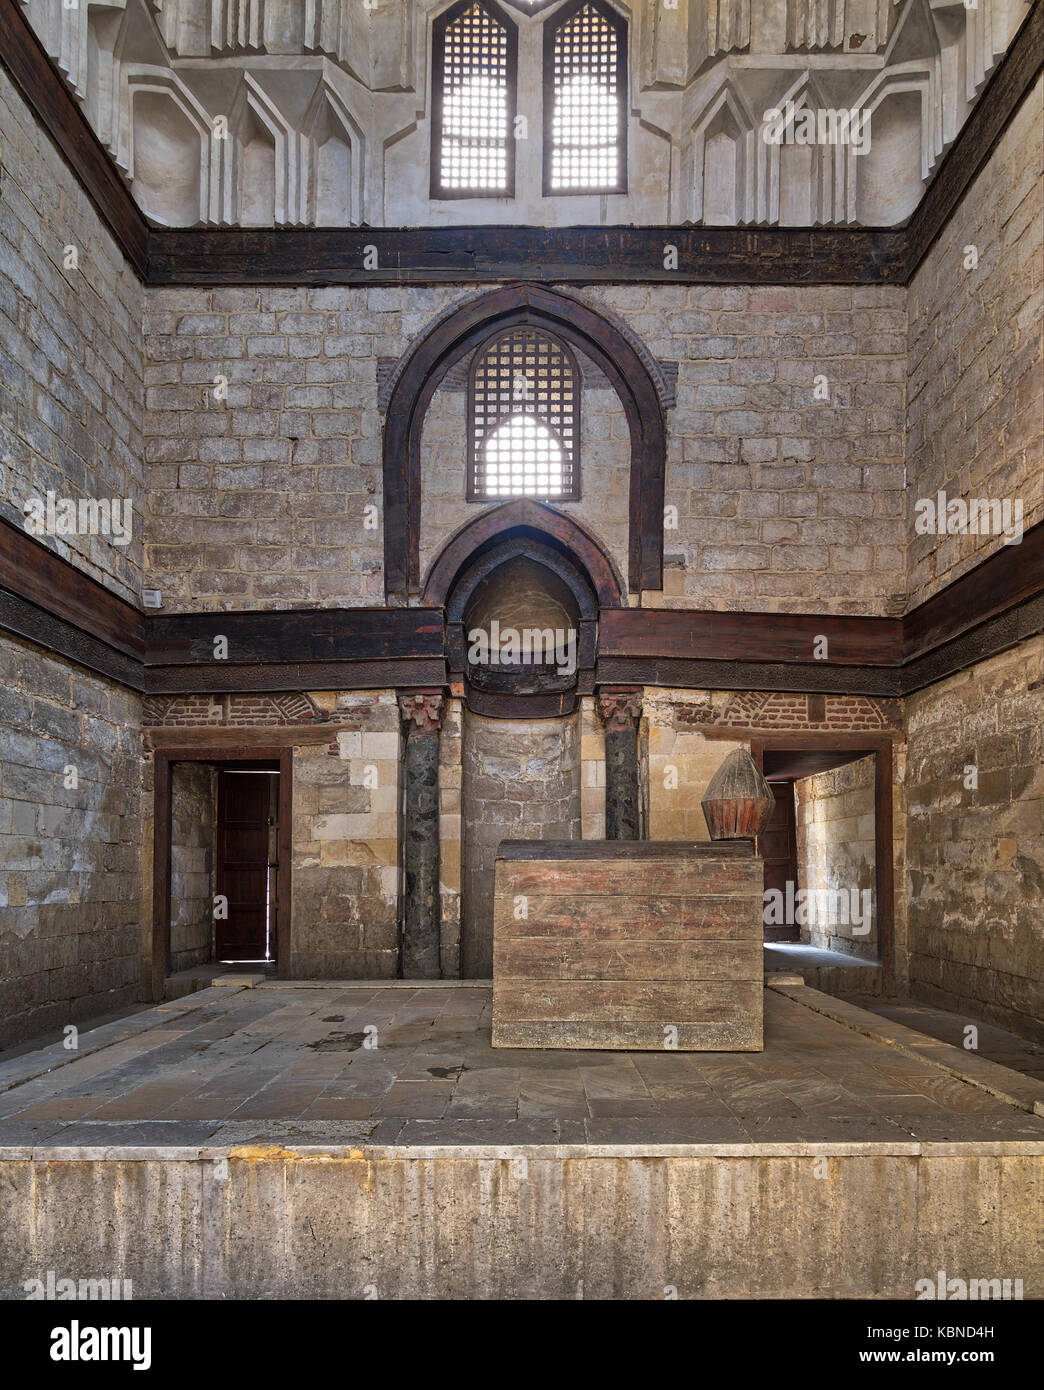 Interior of Mausoleum of al-Nasir Muhammad Ibn Qalawun, Al Muizz Street, Old Cairo, Egypt Stock Photo